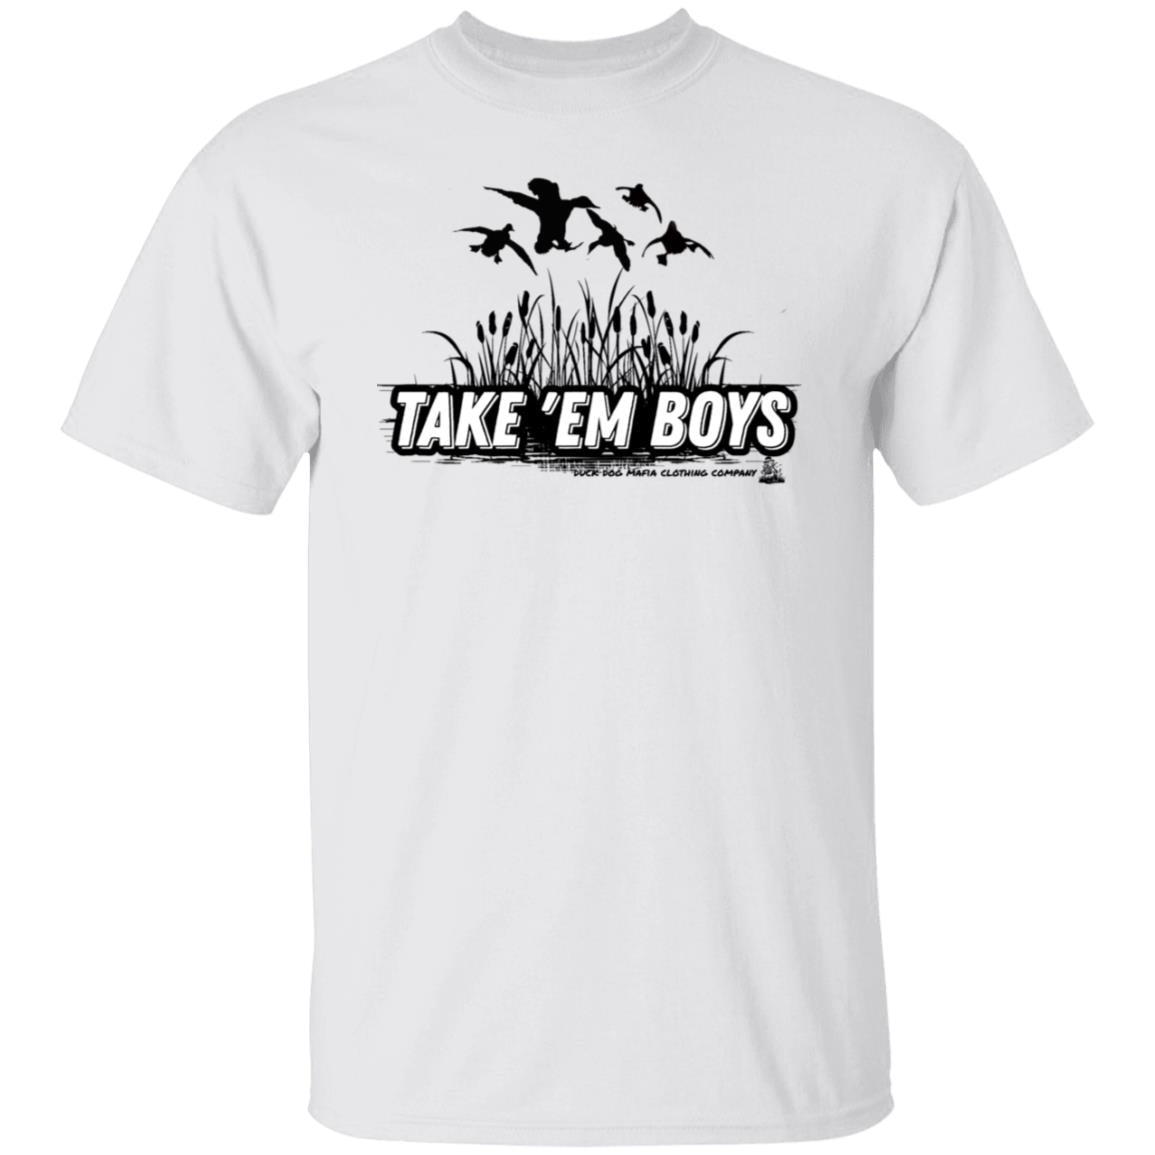 TAKE 'EM BOYS T-SHIRTS